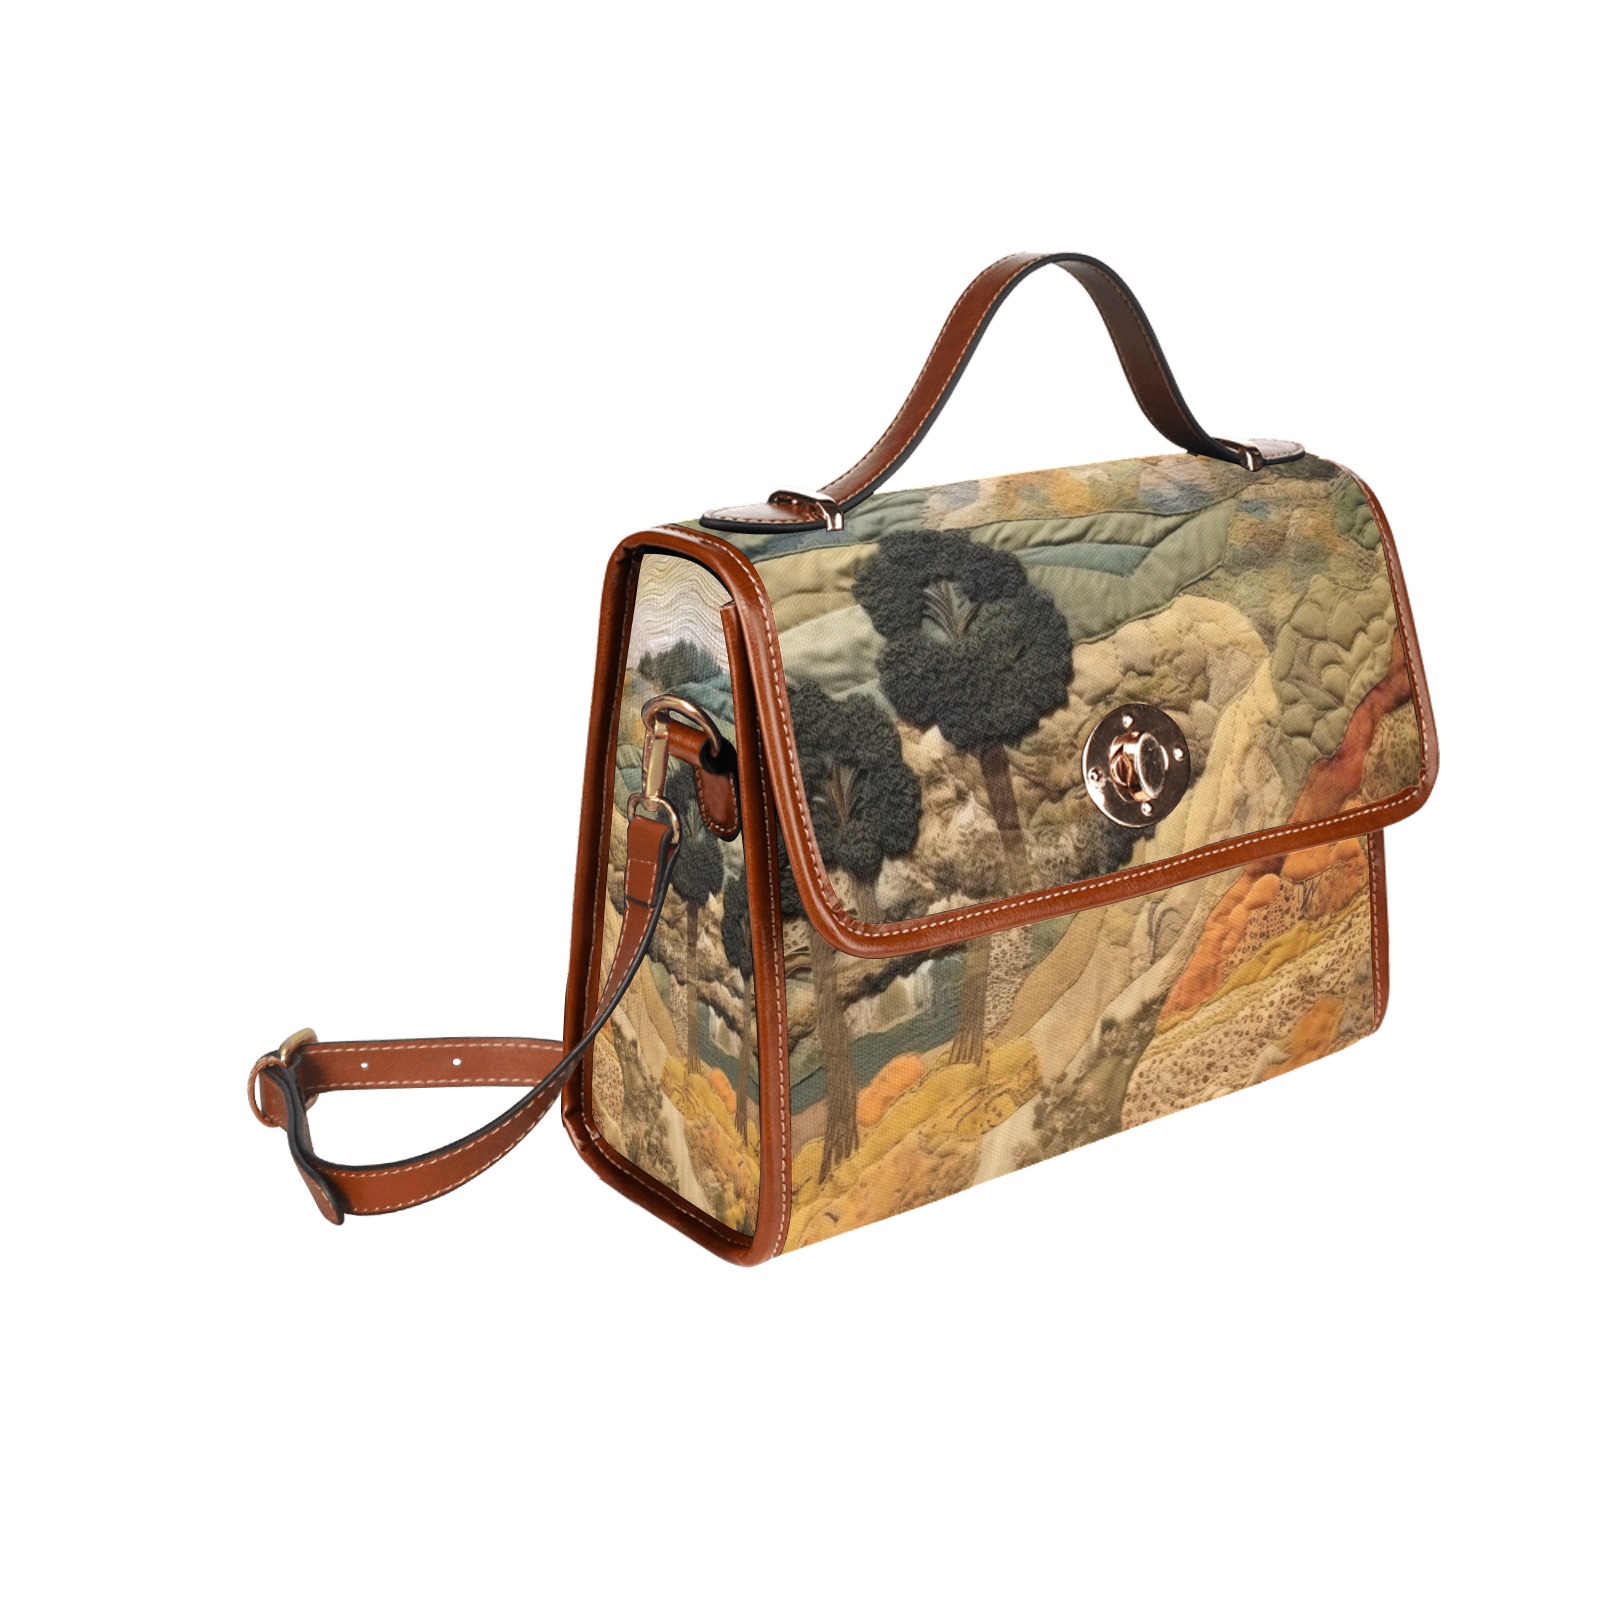 Tapestry Landscape Ladies Satchel Handbag Waterproof Canvas Bag-Brown (All Over Print) (Model 1641)